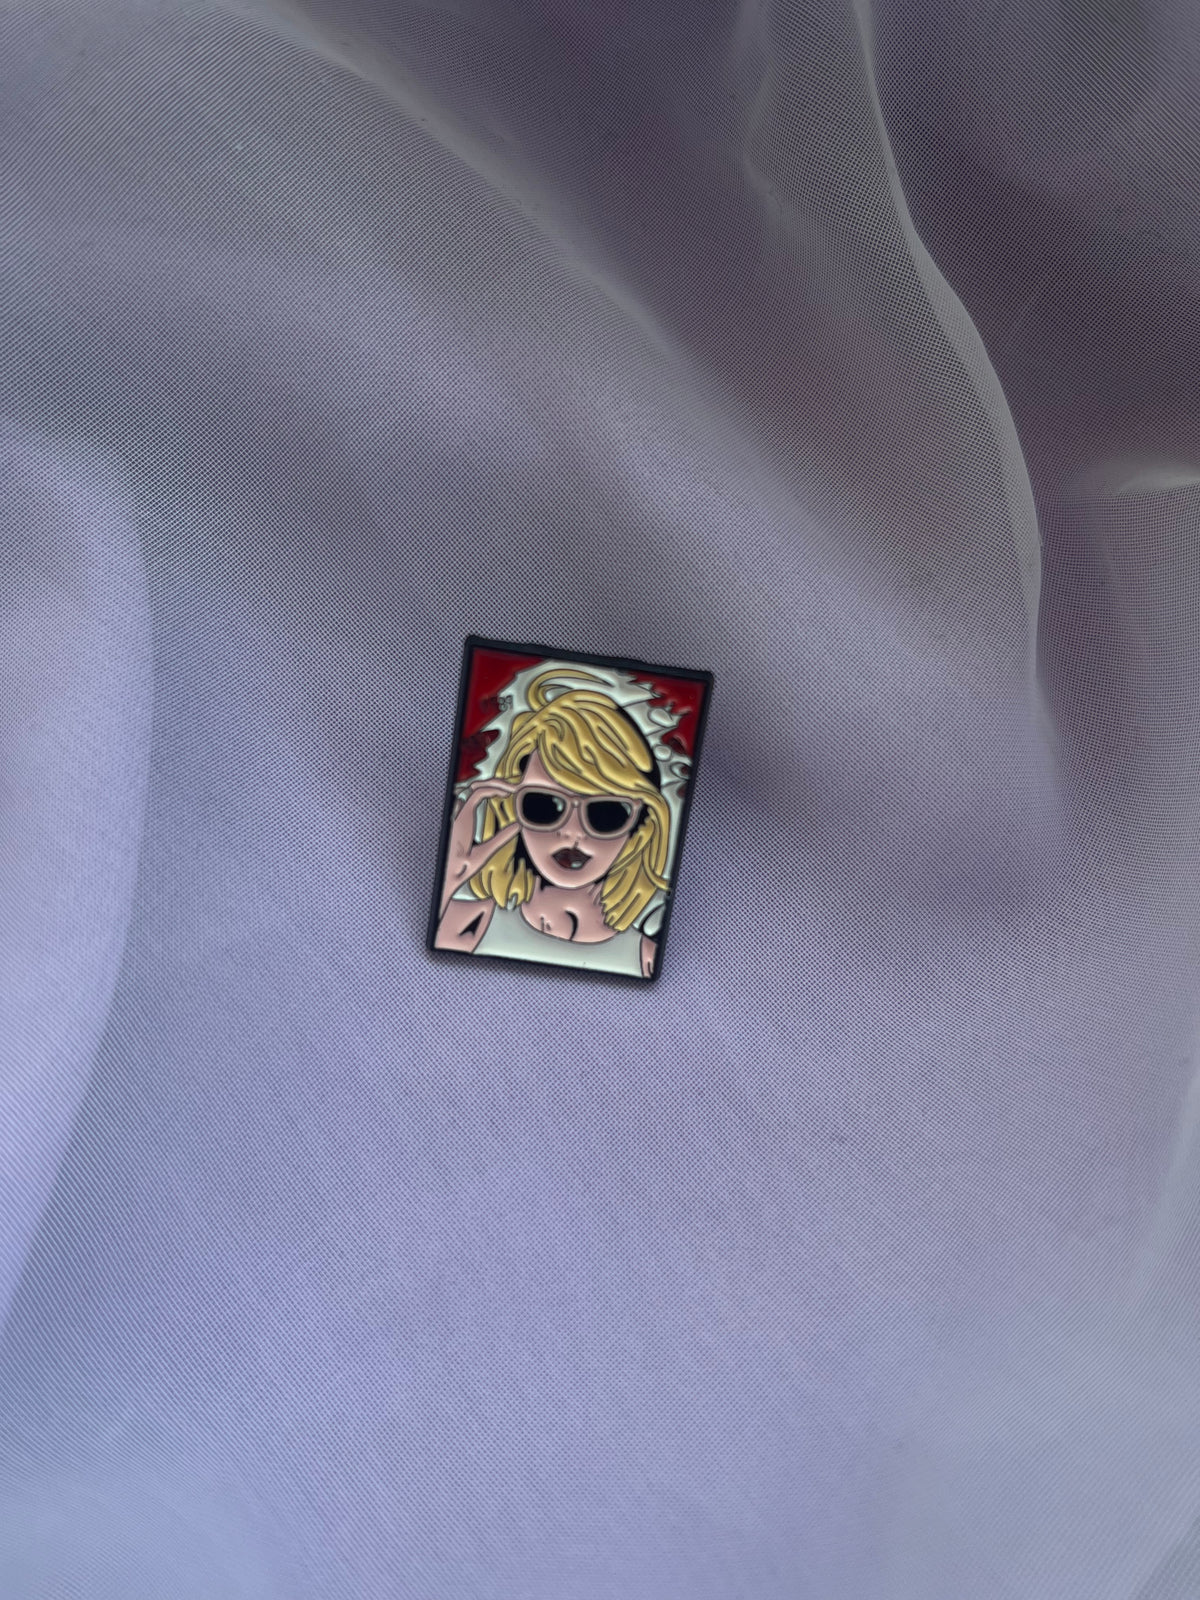 Pop Art Taylor Swift Pin